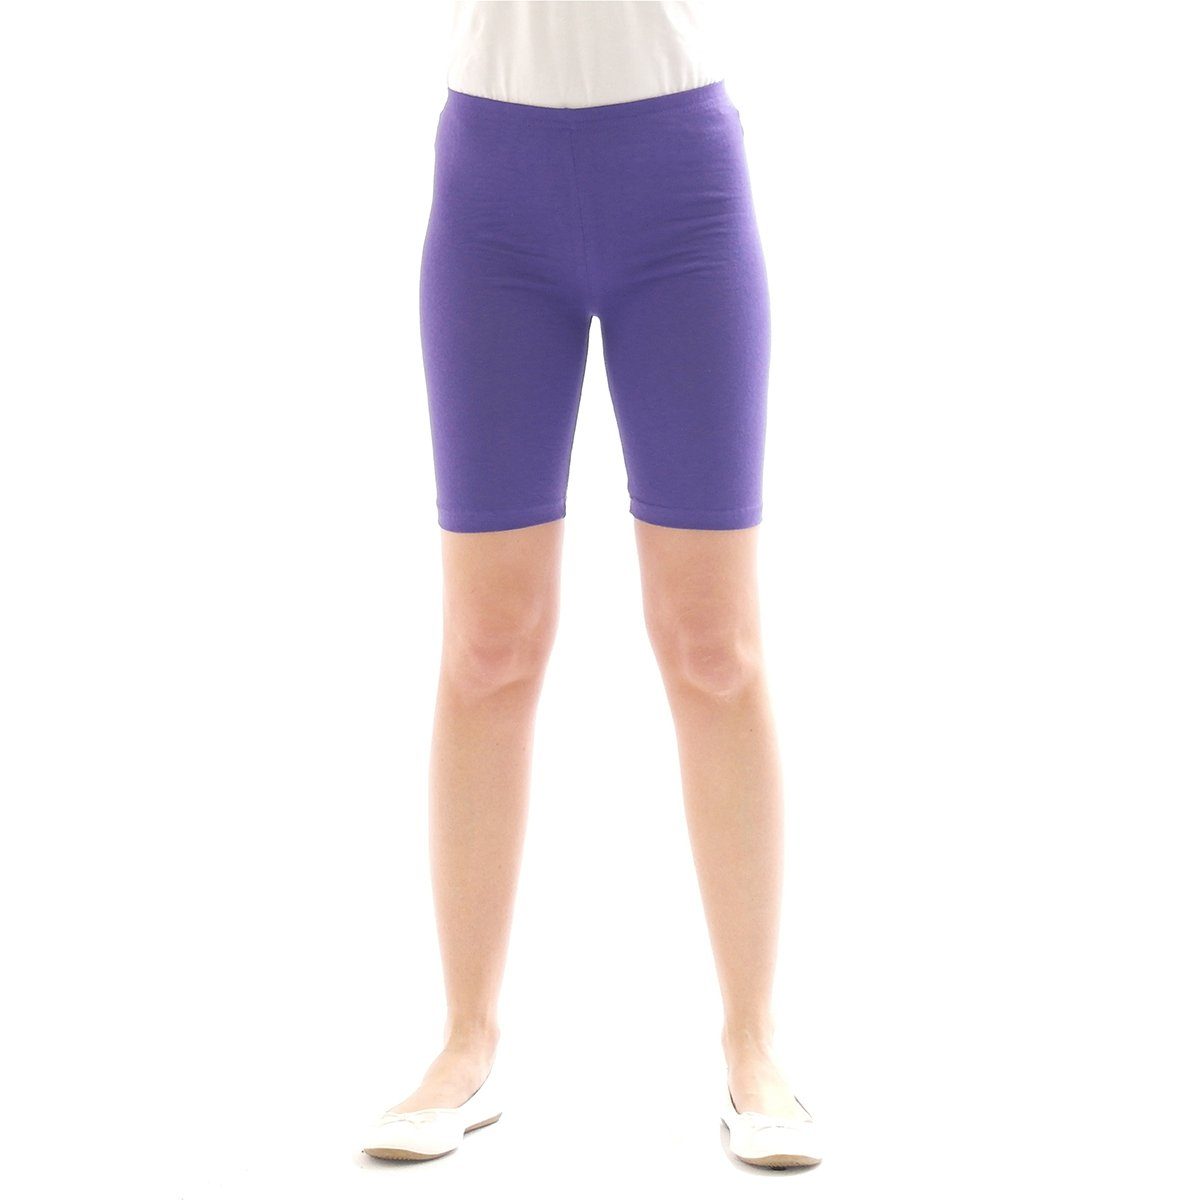 SYS violett Mädchen Baumwolle Shorts Sport Jungen Kinder Shorts Pants 1/2